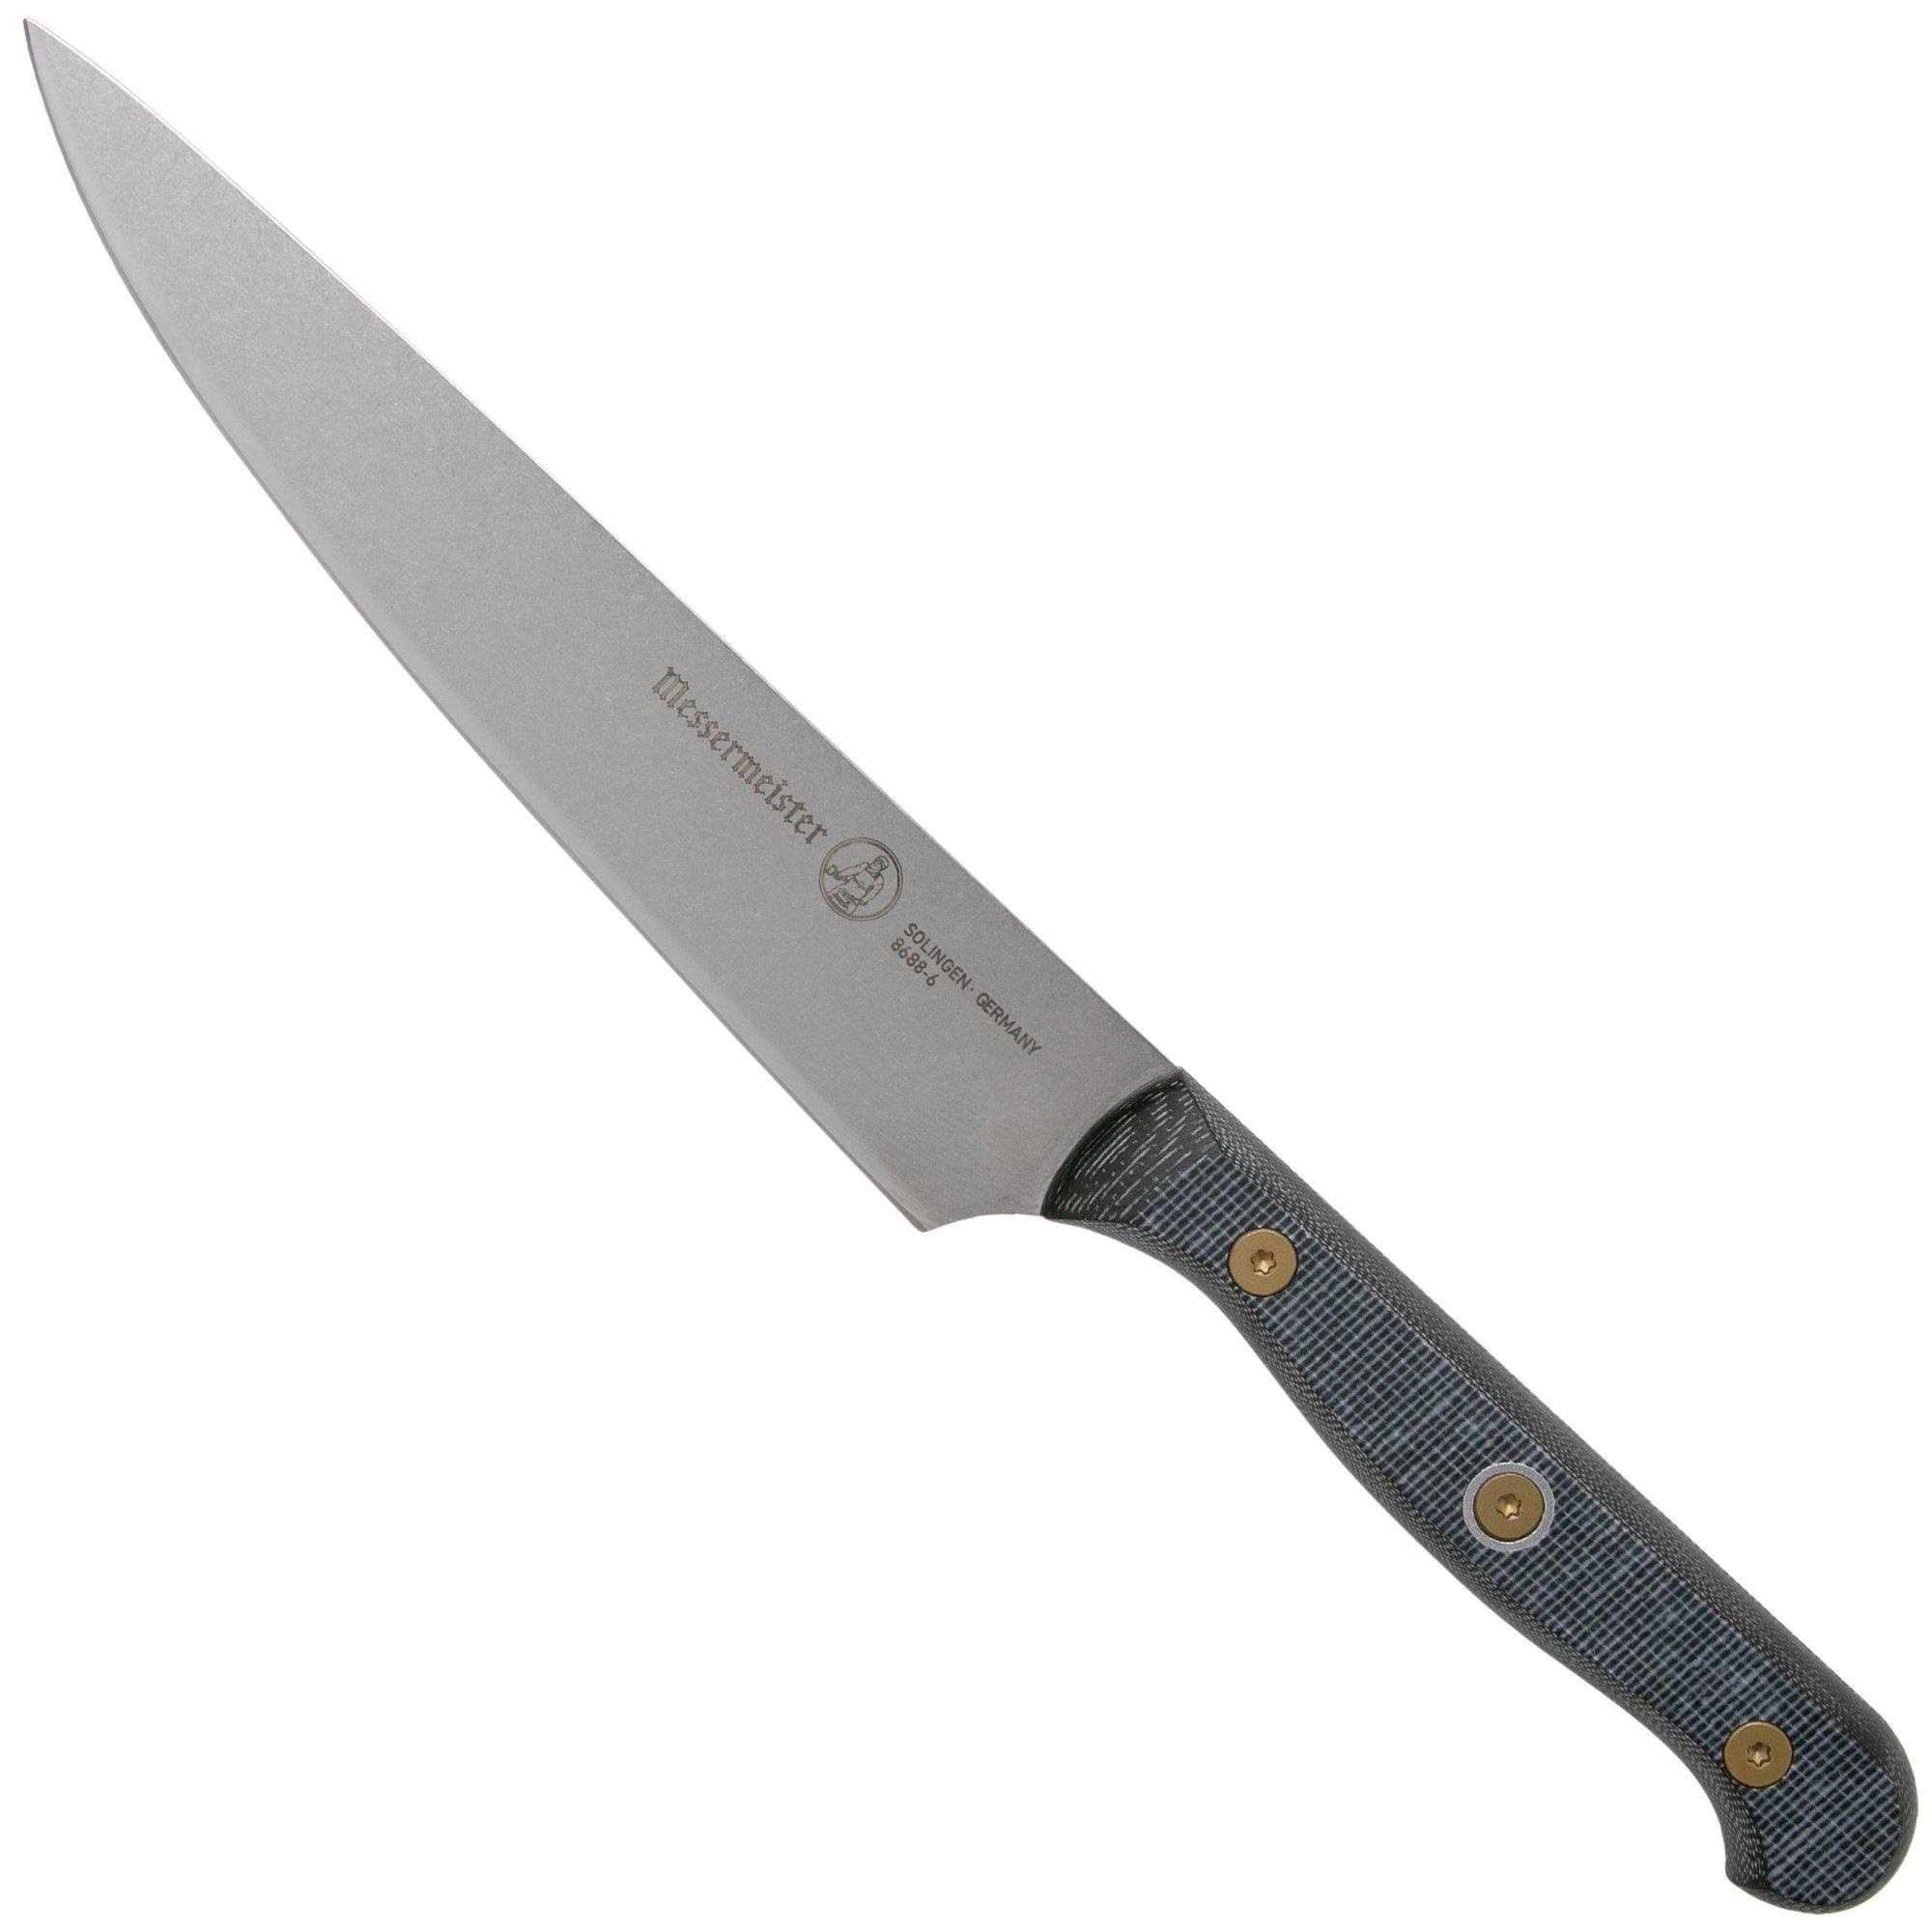 Messermeister Custom 8688-6 utility knife, 15 cm